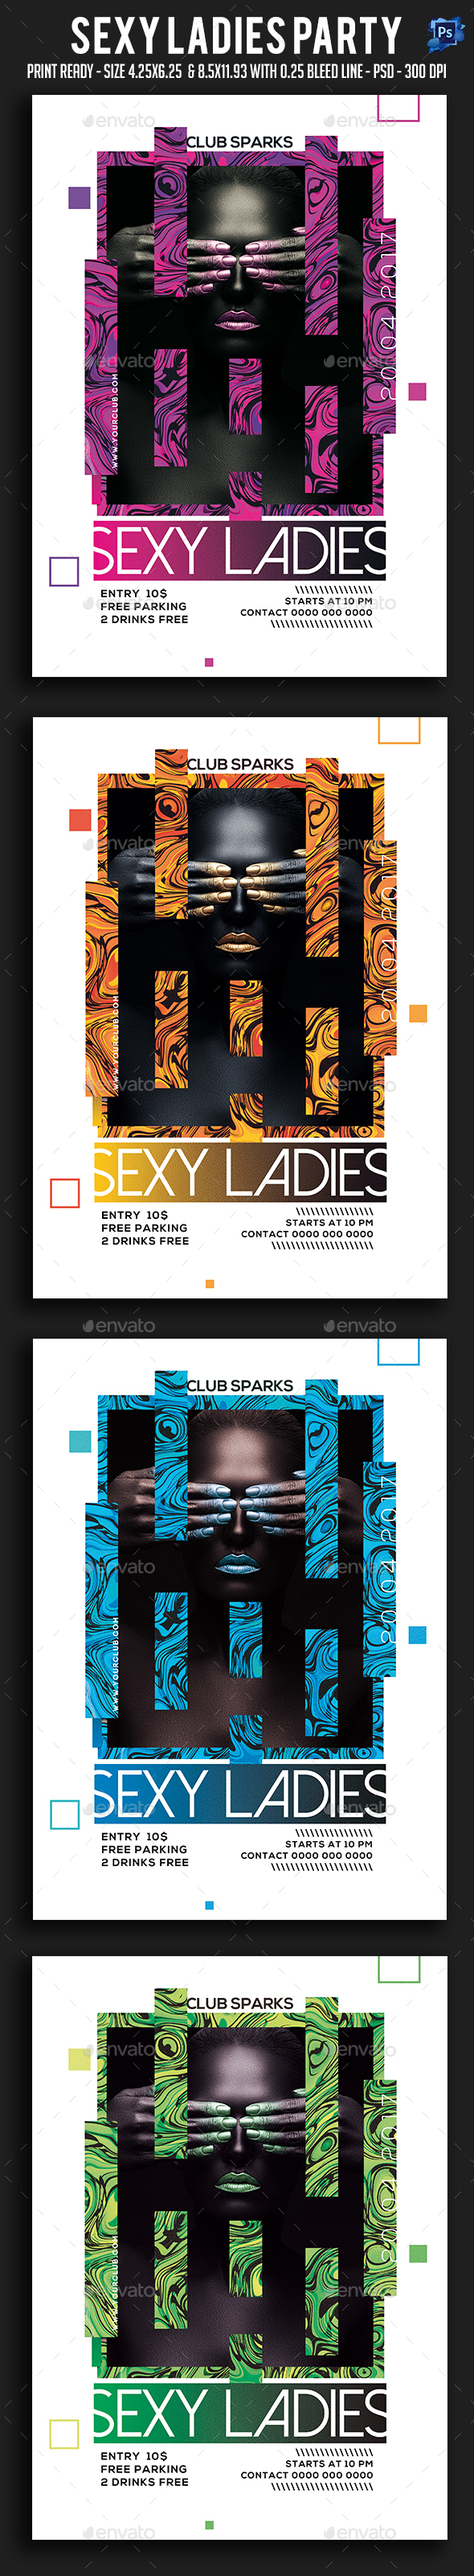 Sexy Ladies Party Flyer